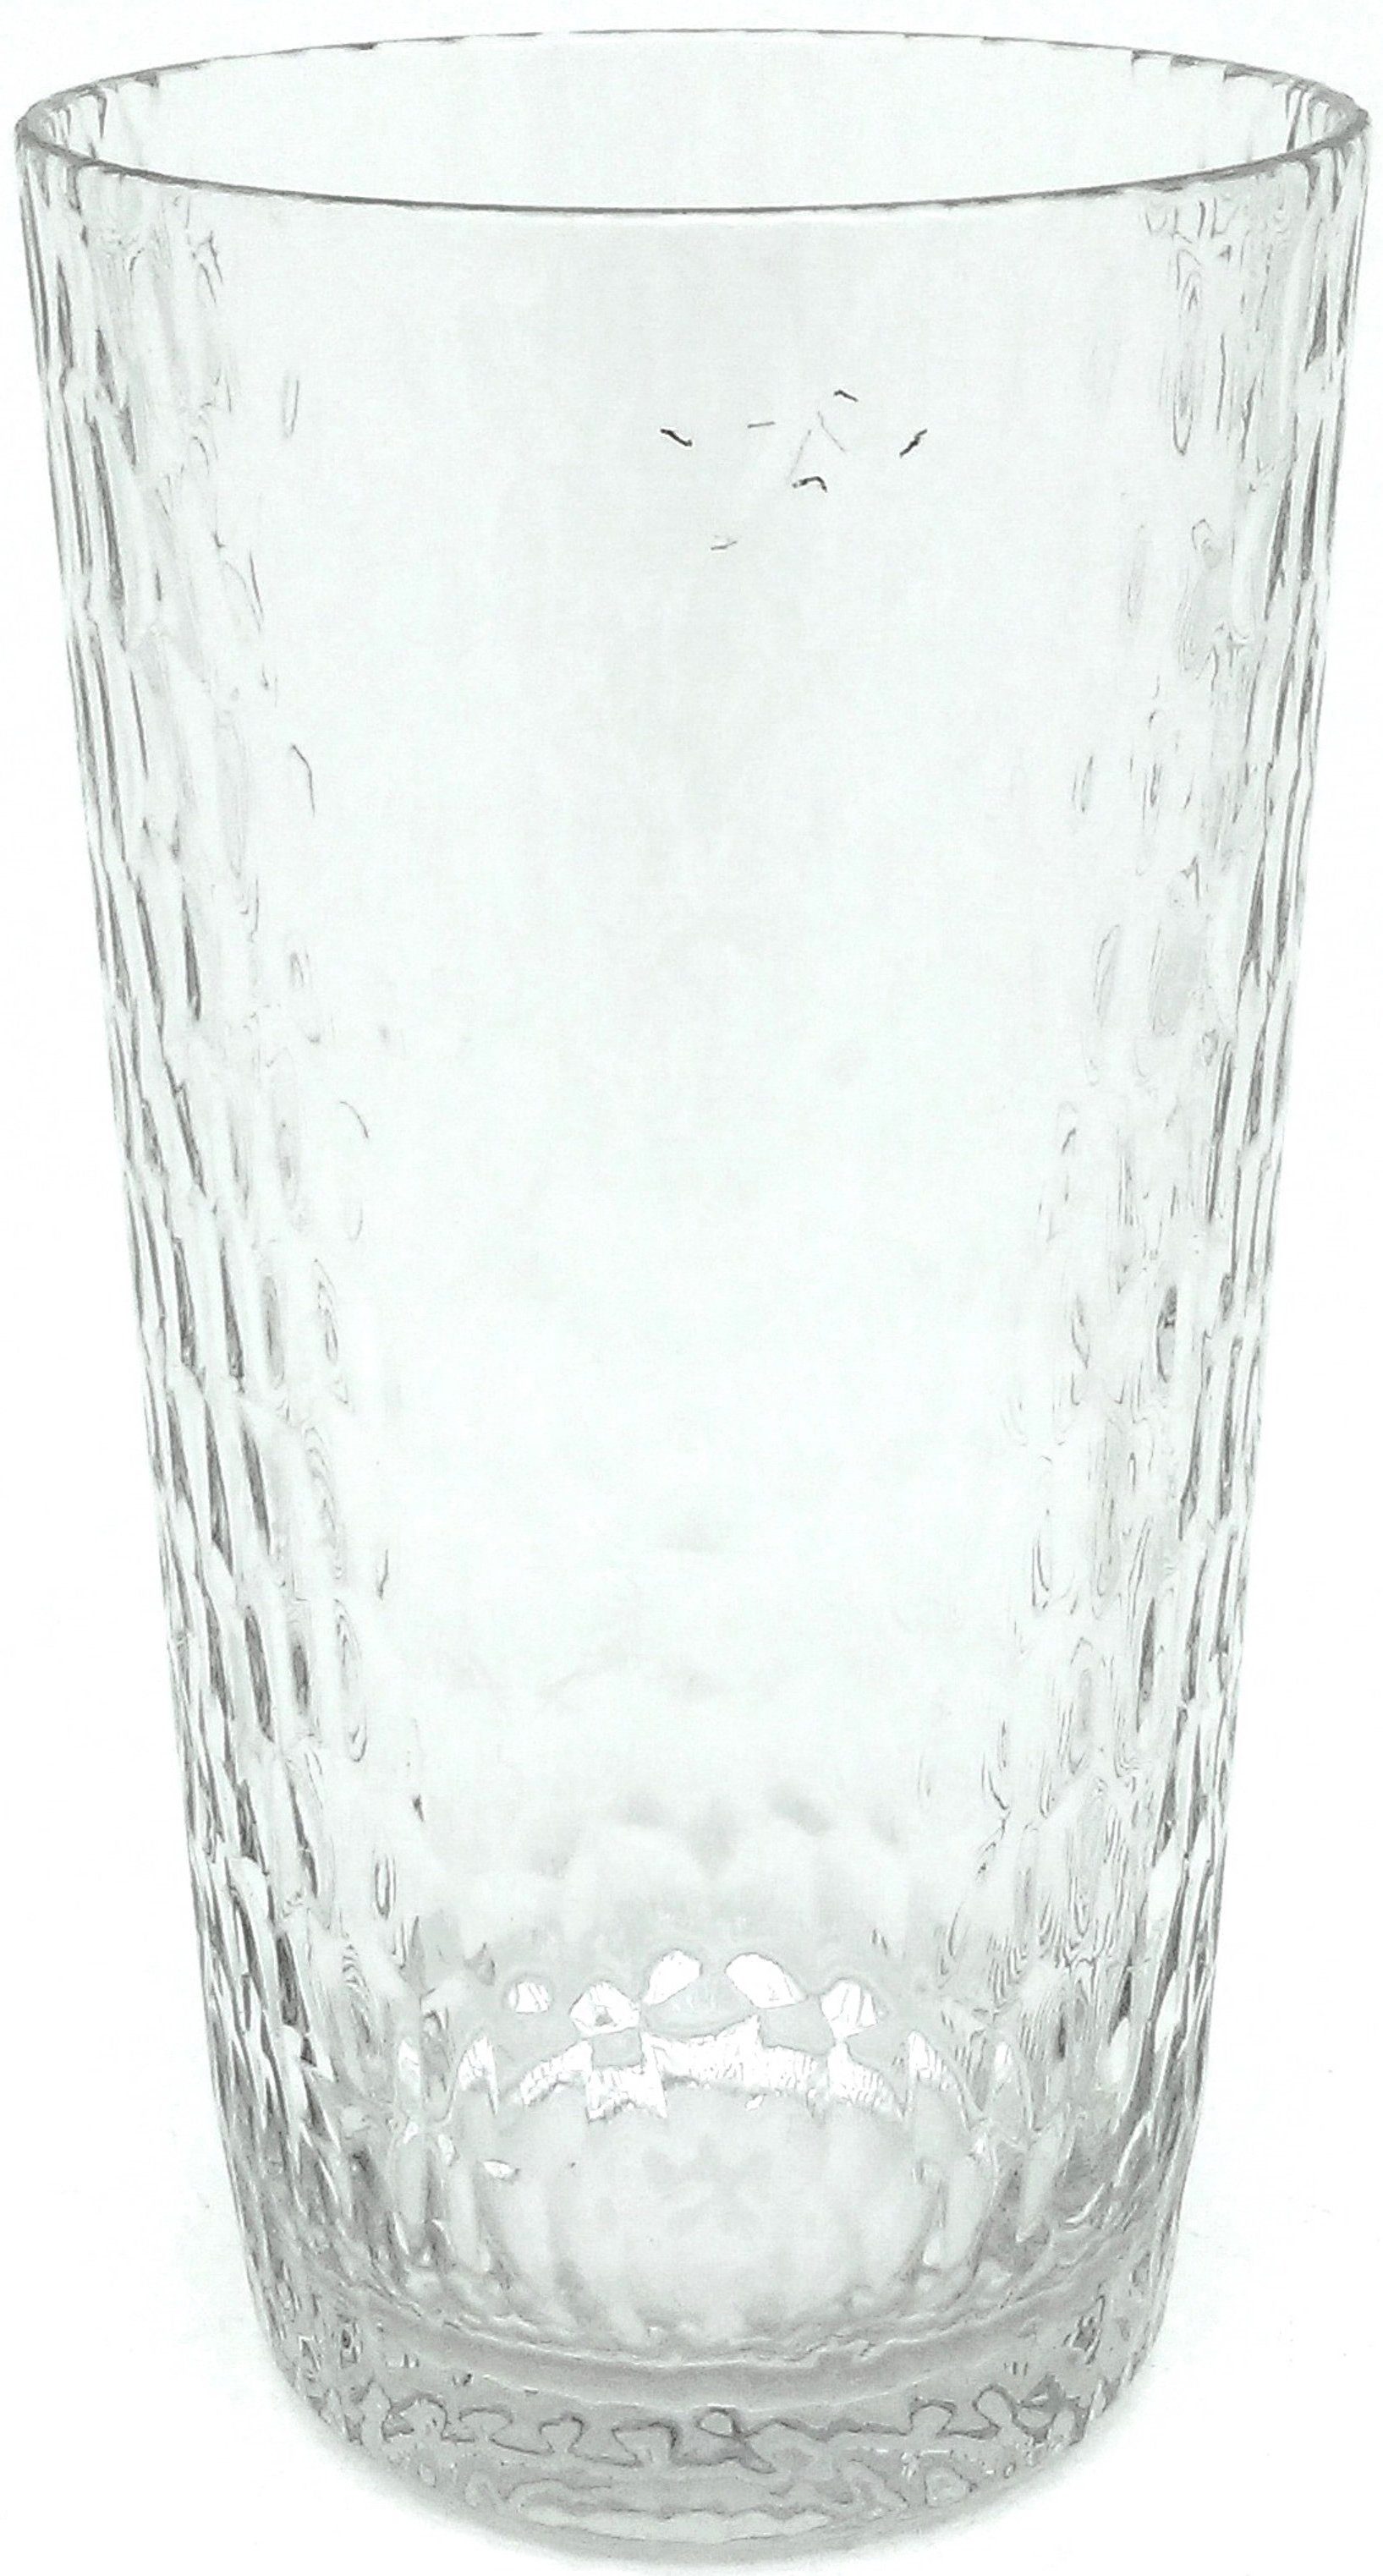 Q Squared NYC Longdrinkglas, Kunststoff, aus sicherem Material -  TRITAN-Kunststoff, 500 ml, 3-teilig online kaufen | OTTO